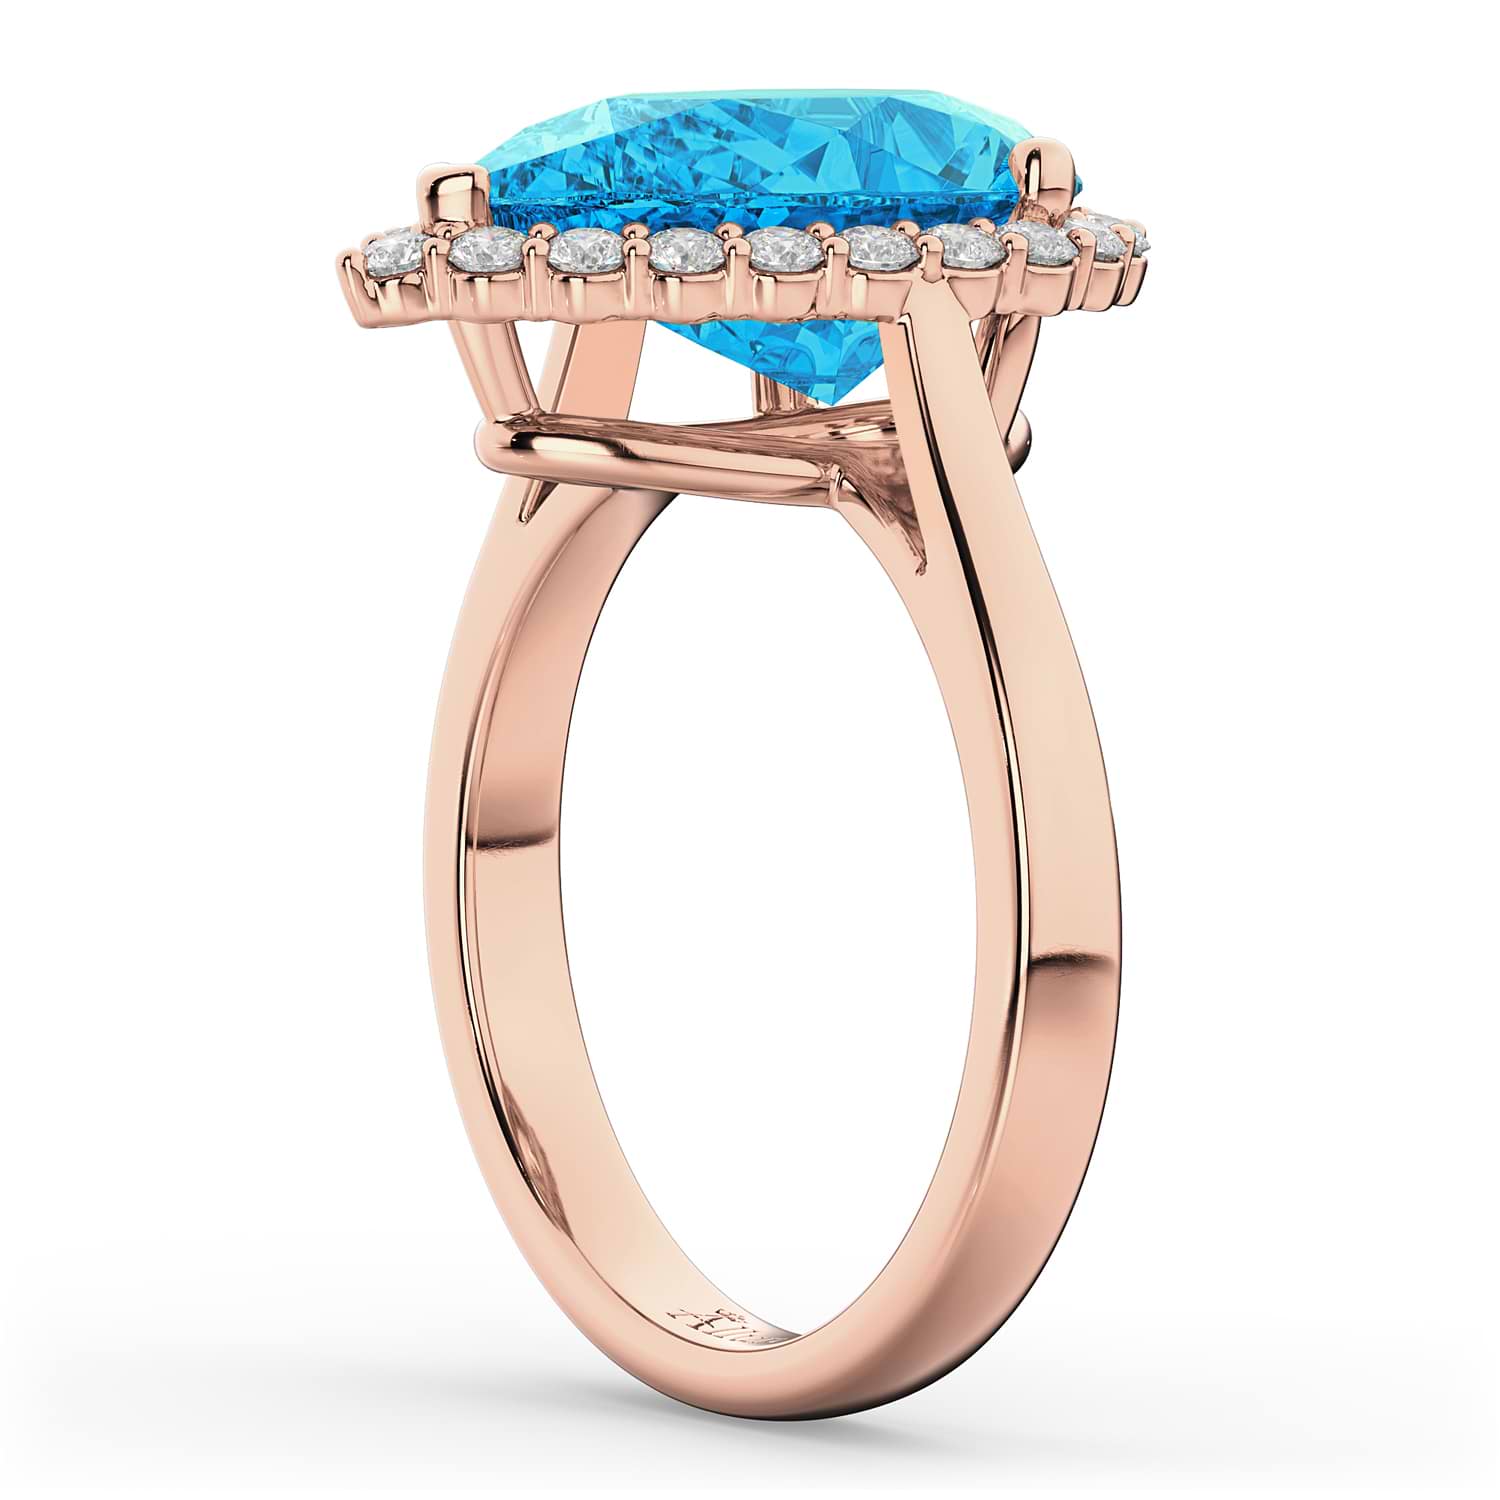 Pear Cut Halo Blue Topaz & Diamond Engagement Ring 14K Rose Gold 8.94ct